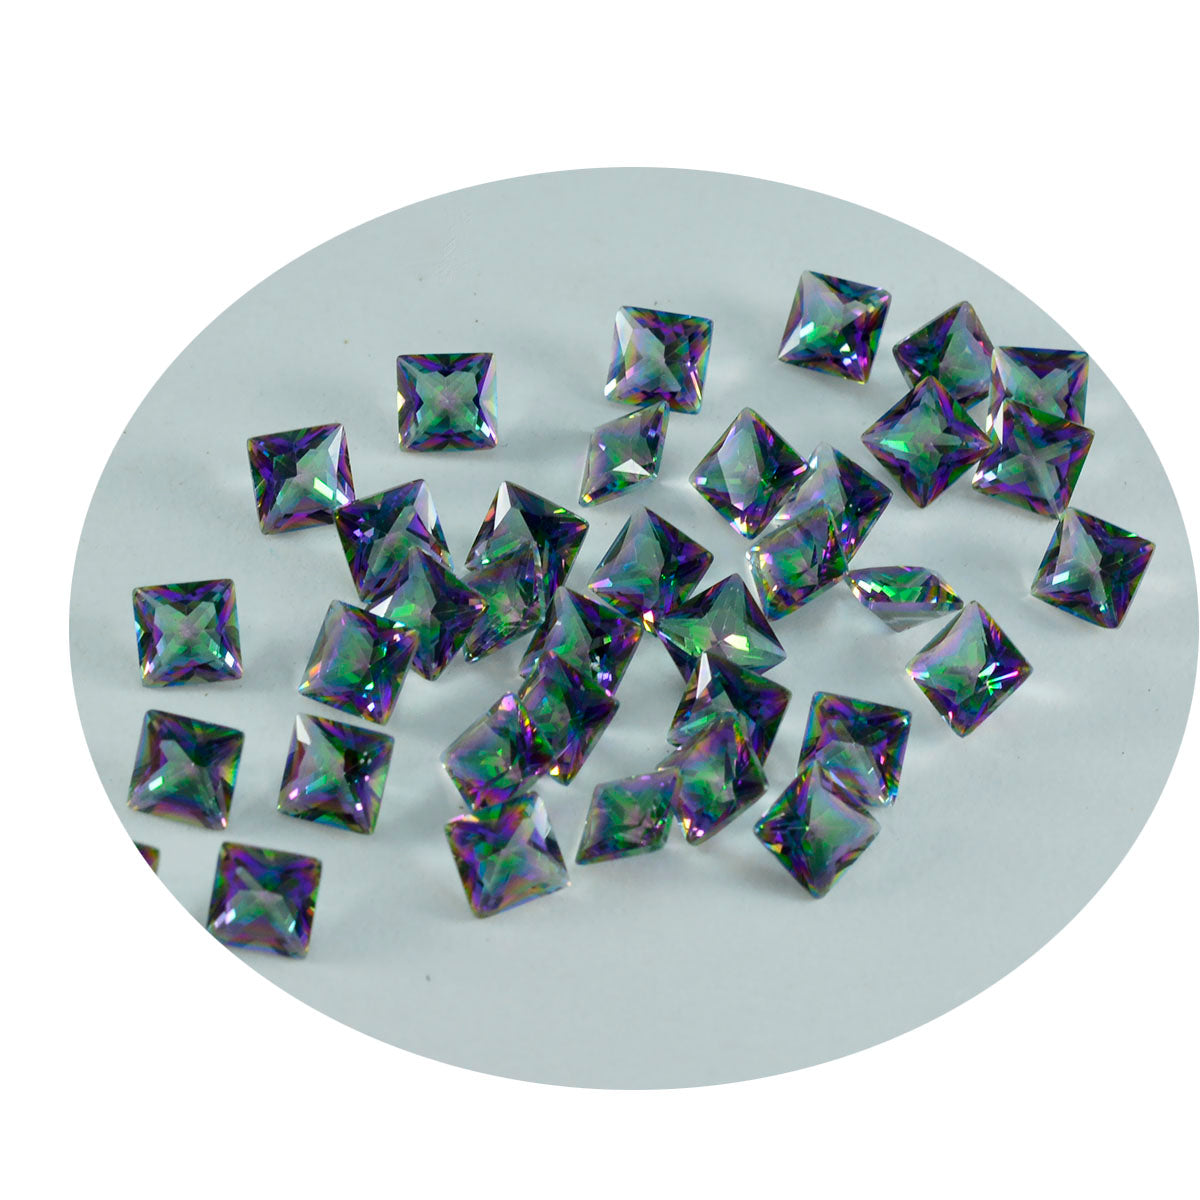 Riyogems 1PC Multi Color Mystic Quartz Faceted 4x4 mm Square Shape Good Quality Gemstone